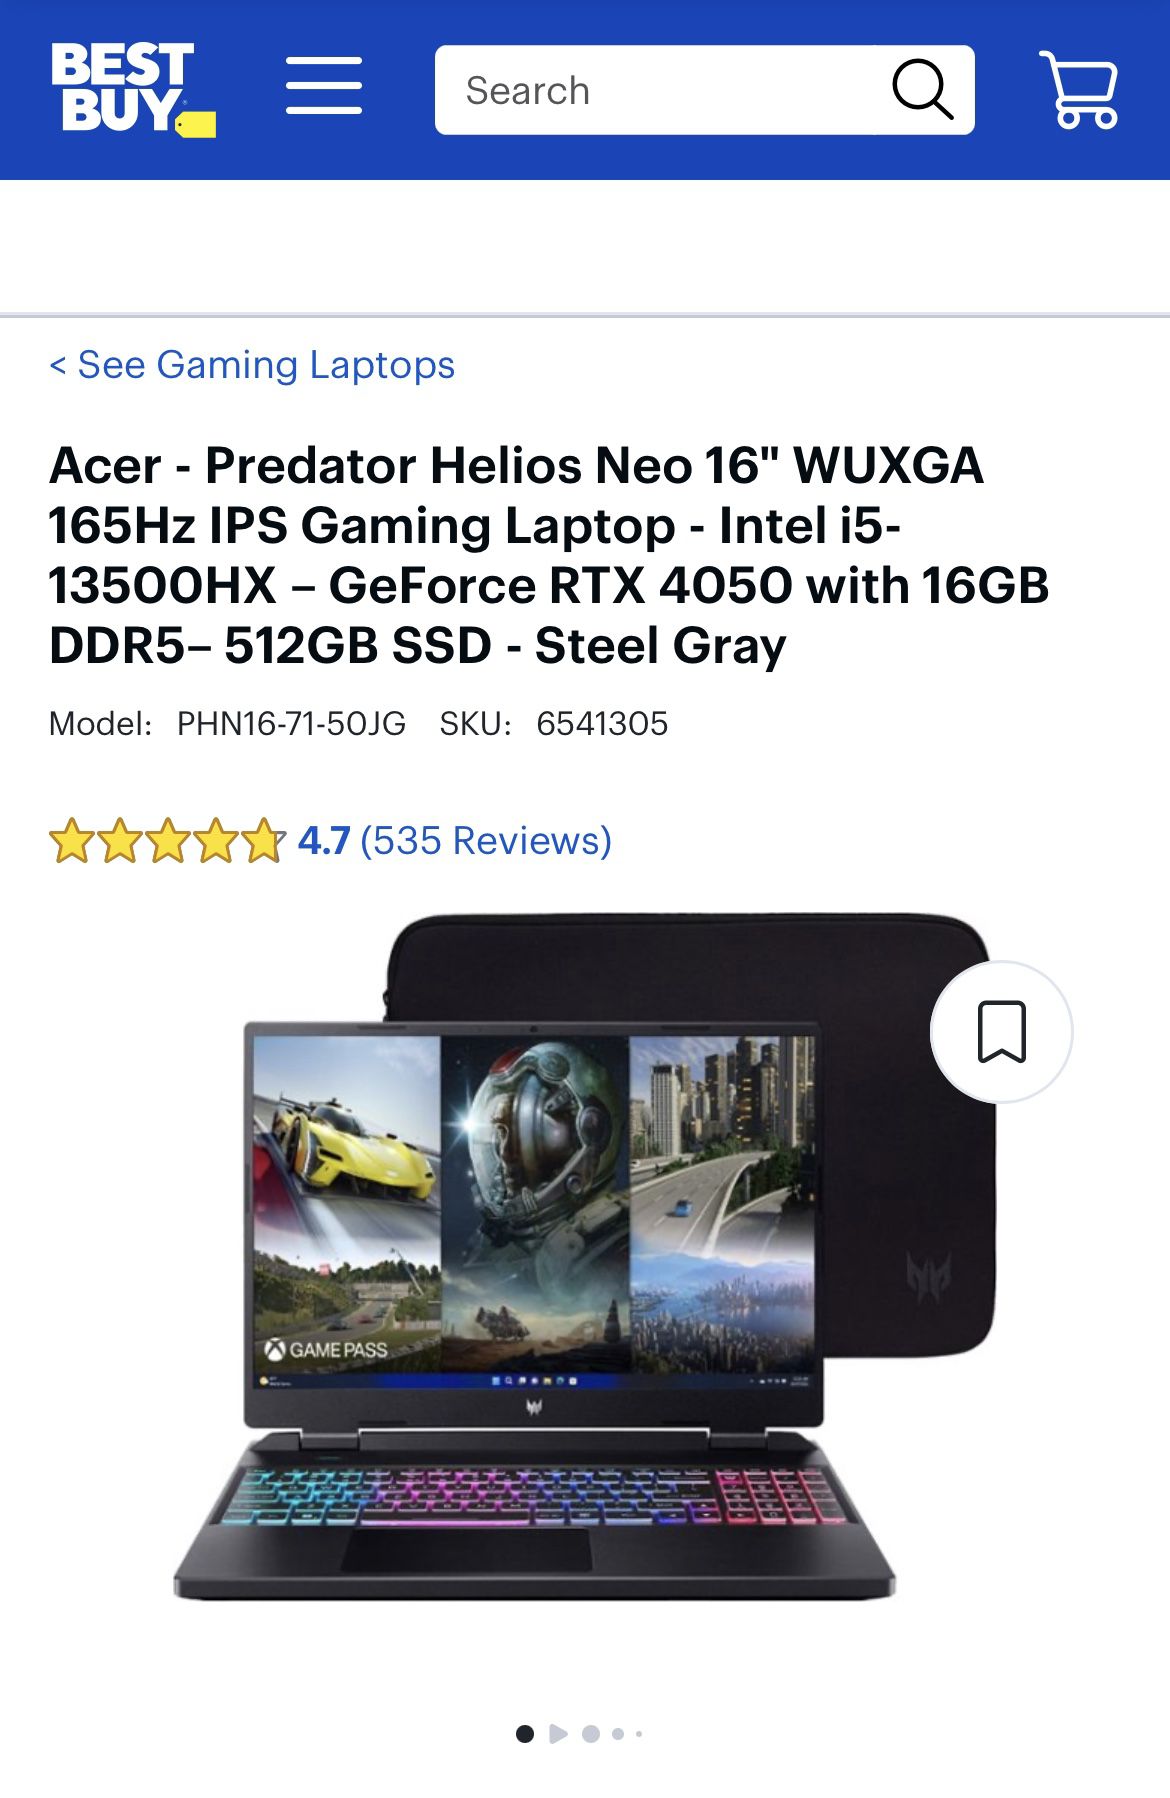 Acer - Predator Helios Neo 16" WUXGA 165Hz IPS Gaming Laptop